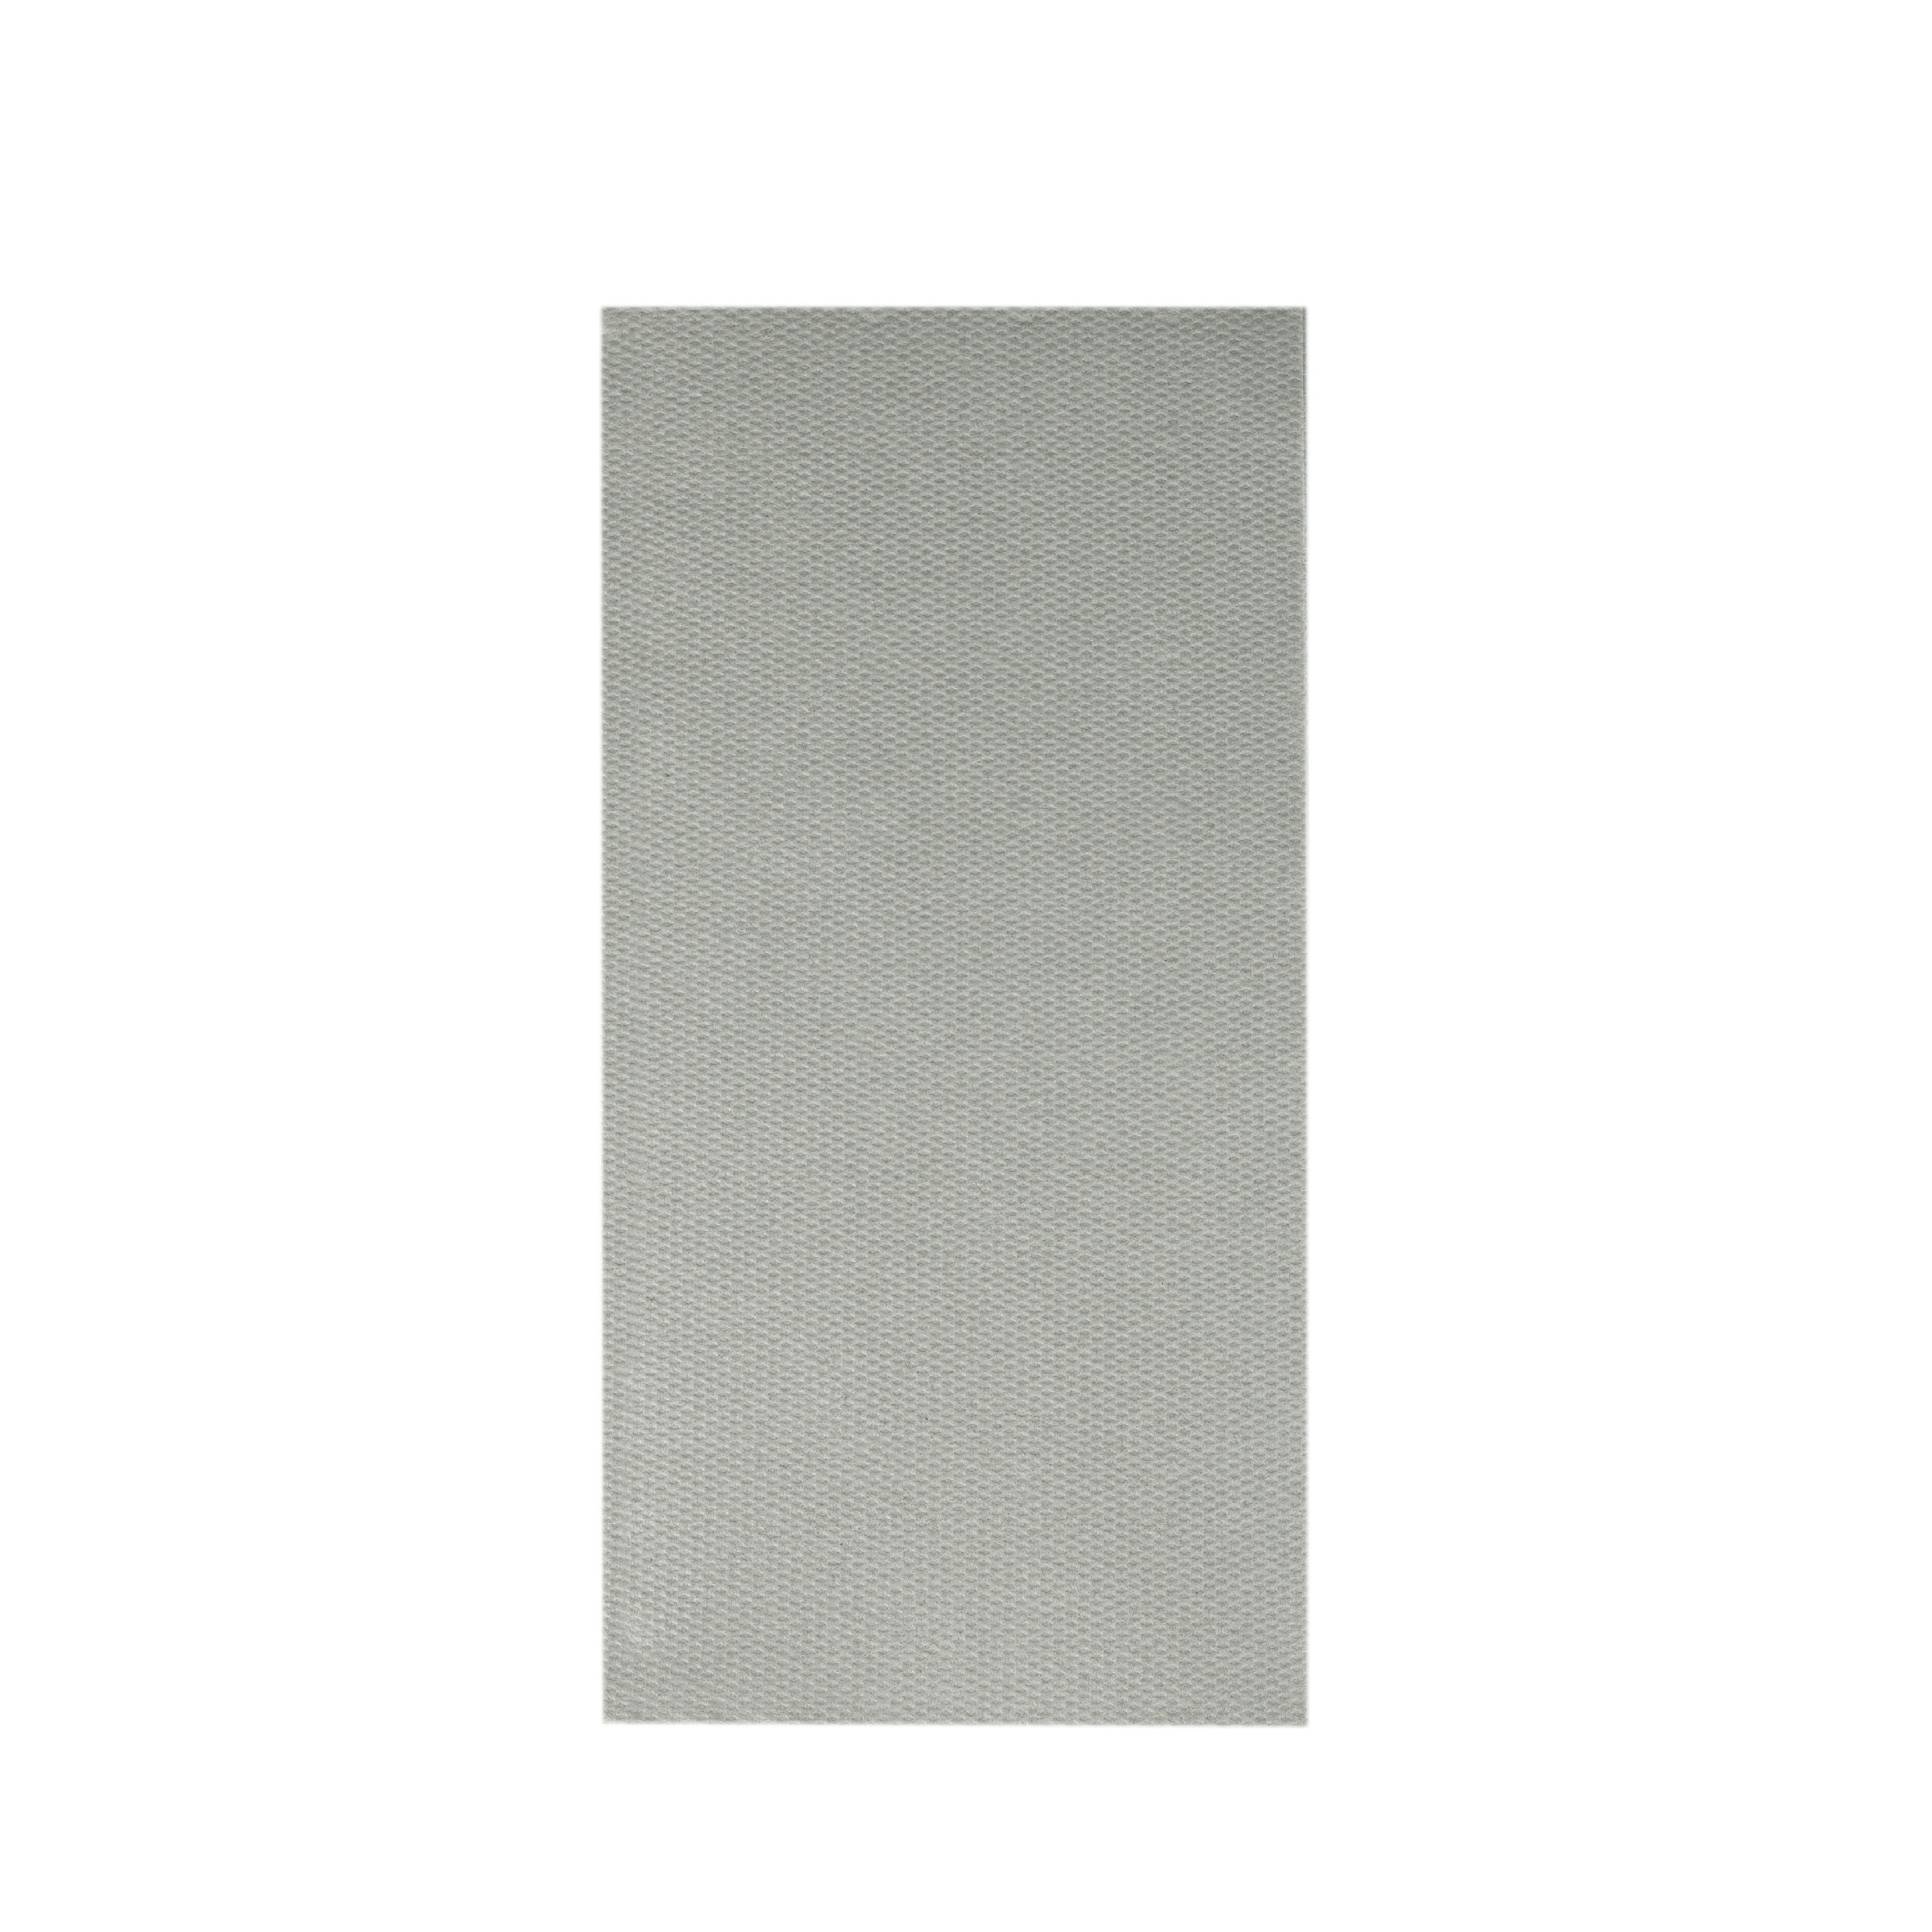 Mank Serviette Softpoint 1/8 Falz, 40 x 40 cm, Basic grau